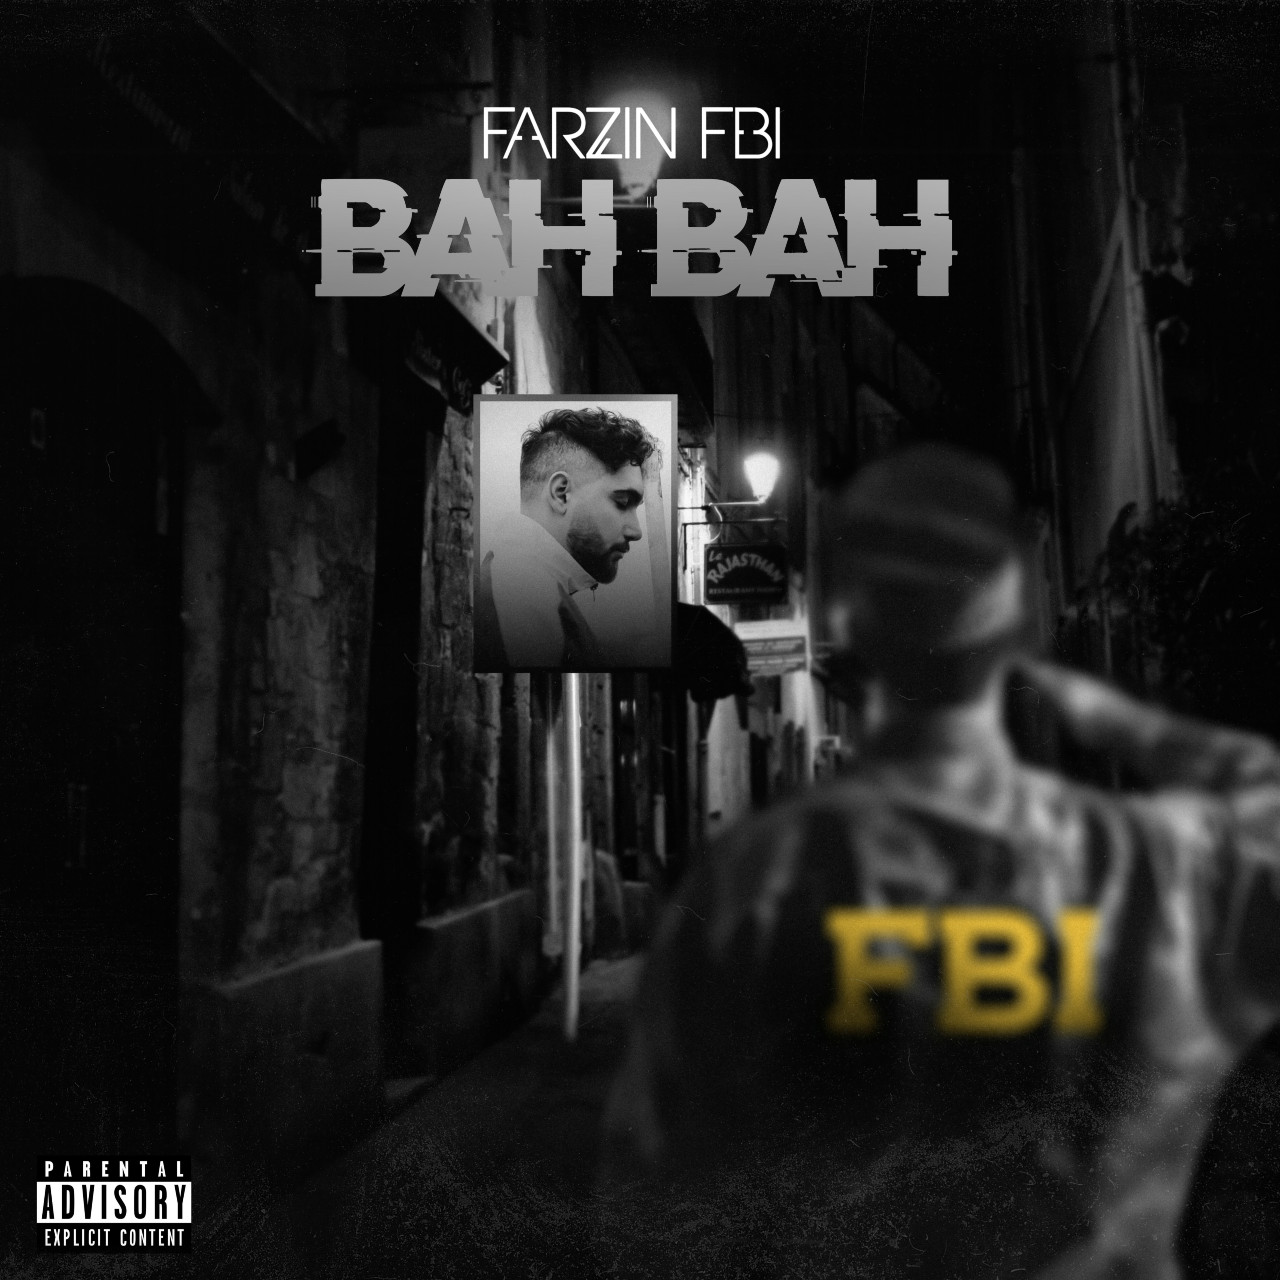 Farzin FBI - Bah Bah